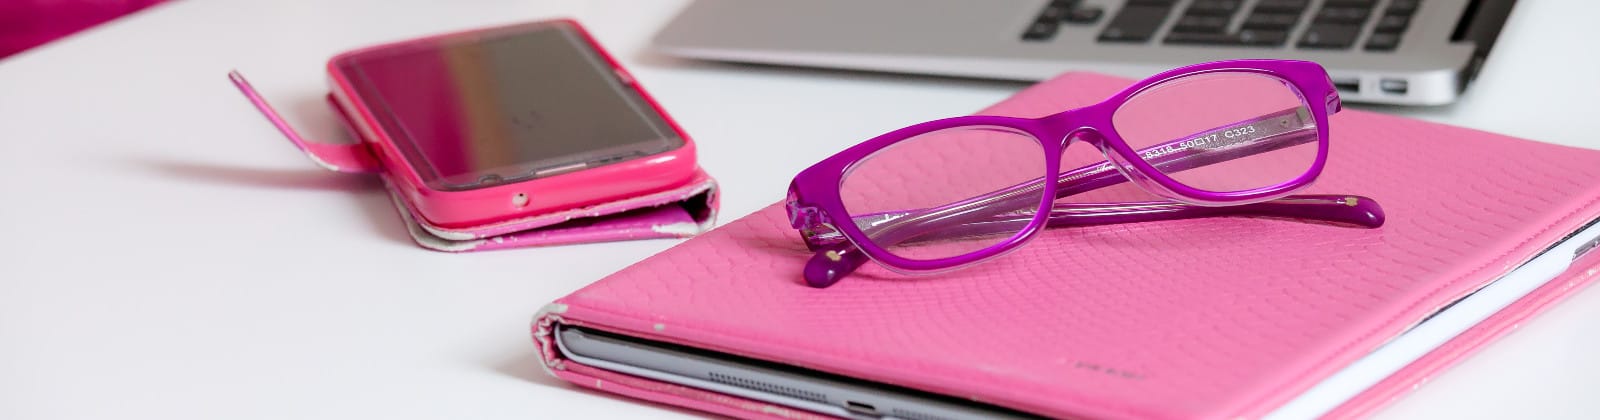 Phone, iPad and glasses